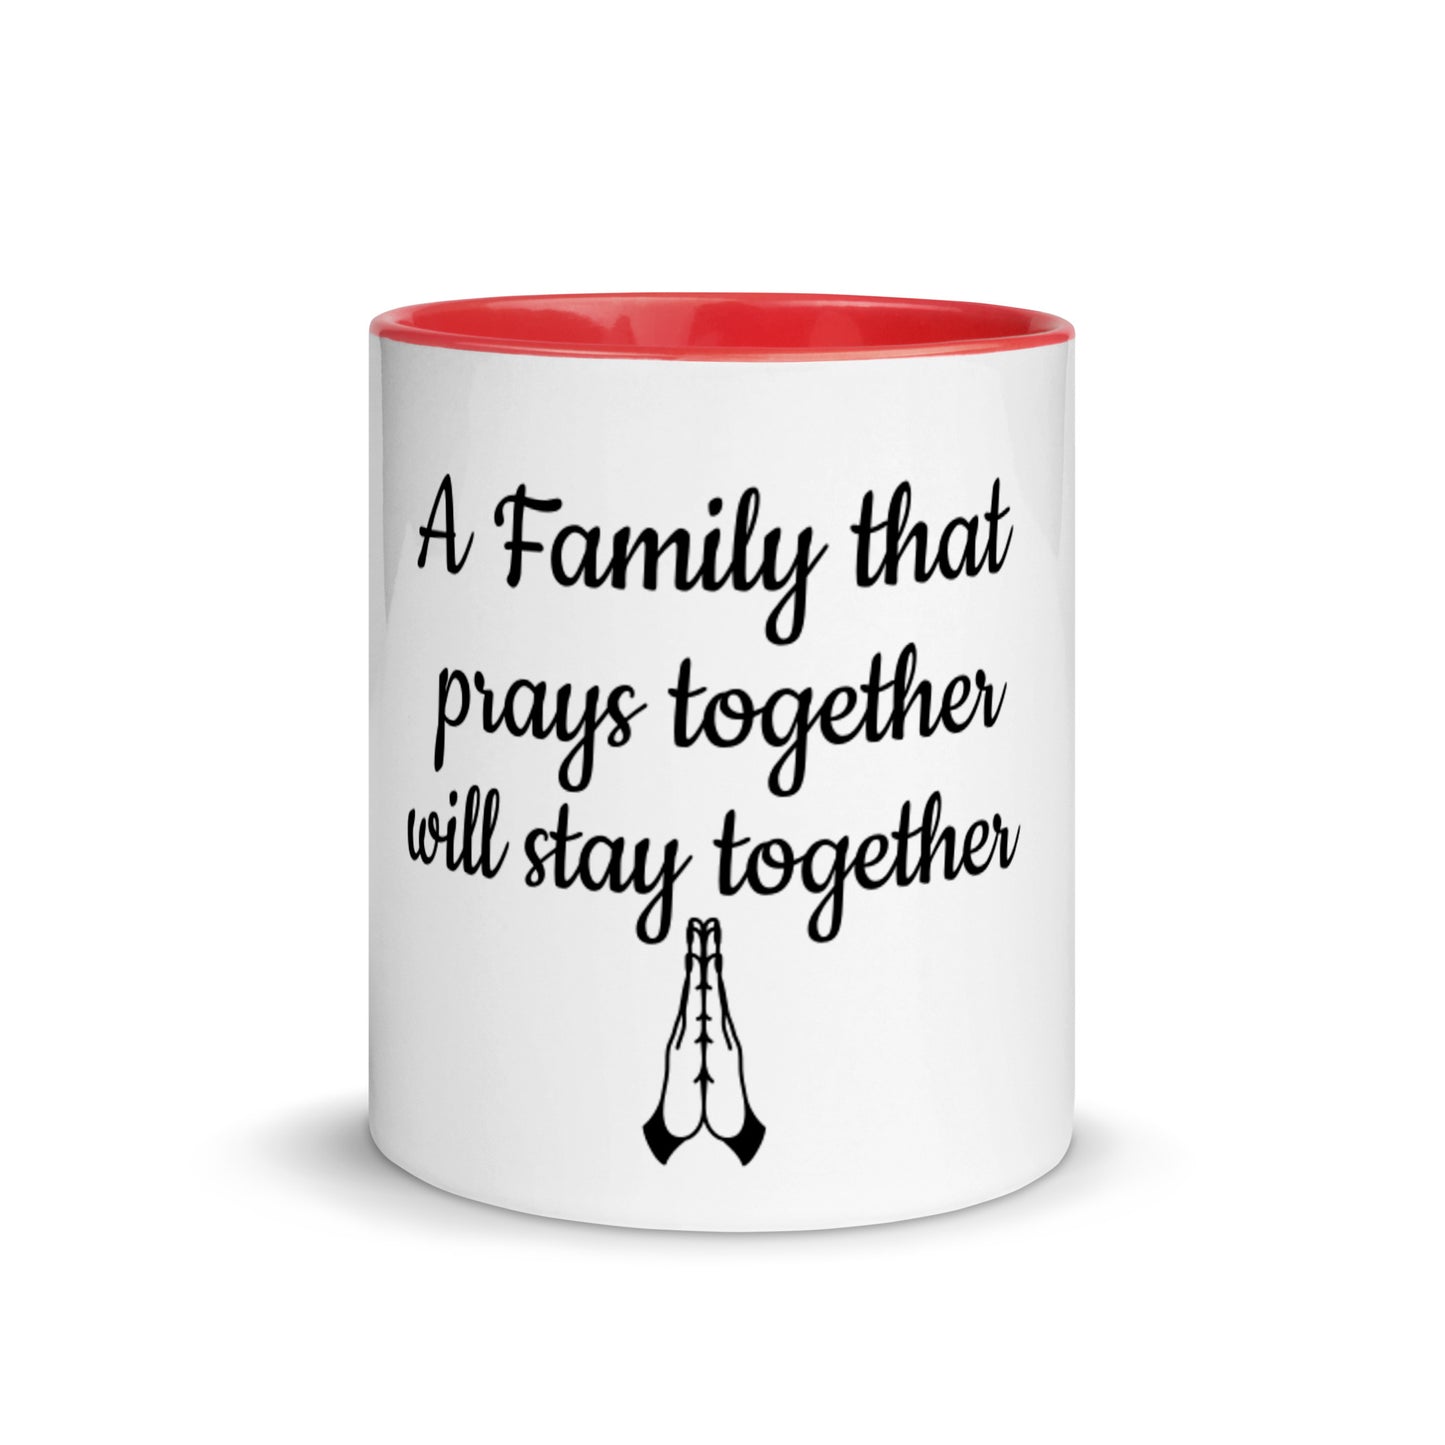 A Family That Prays Together White Ceramic Mug with Color Inside